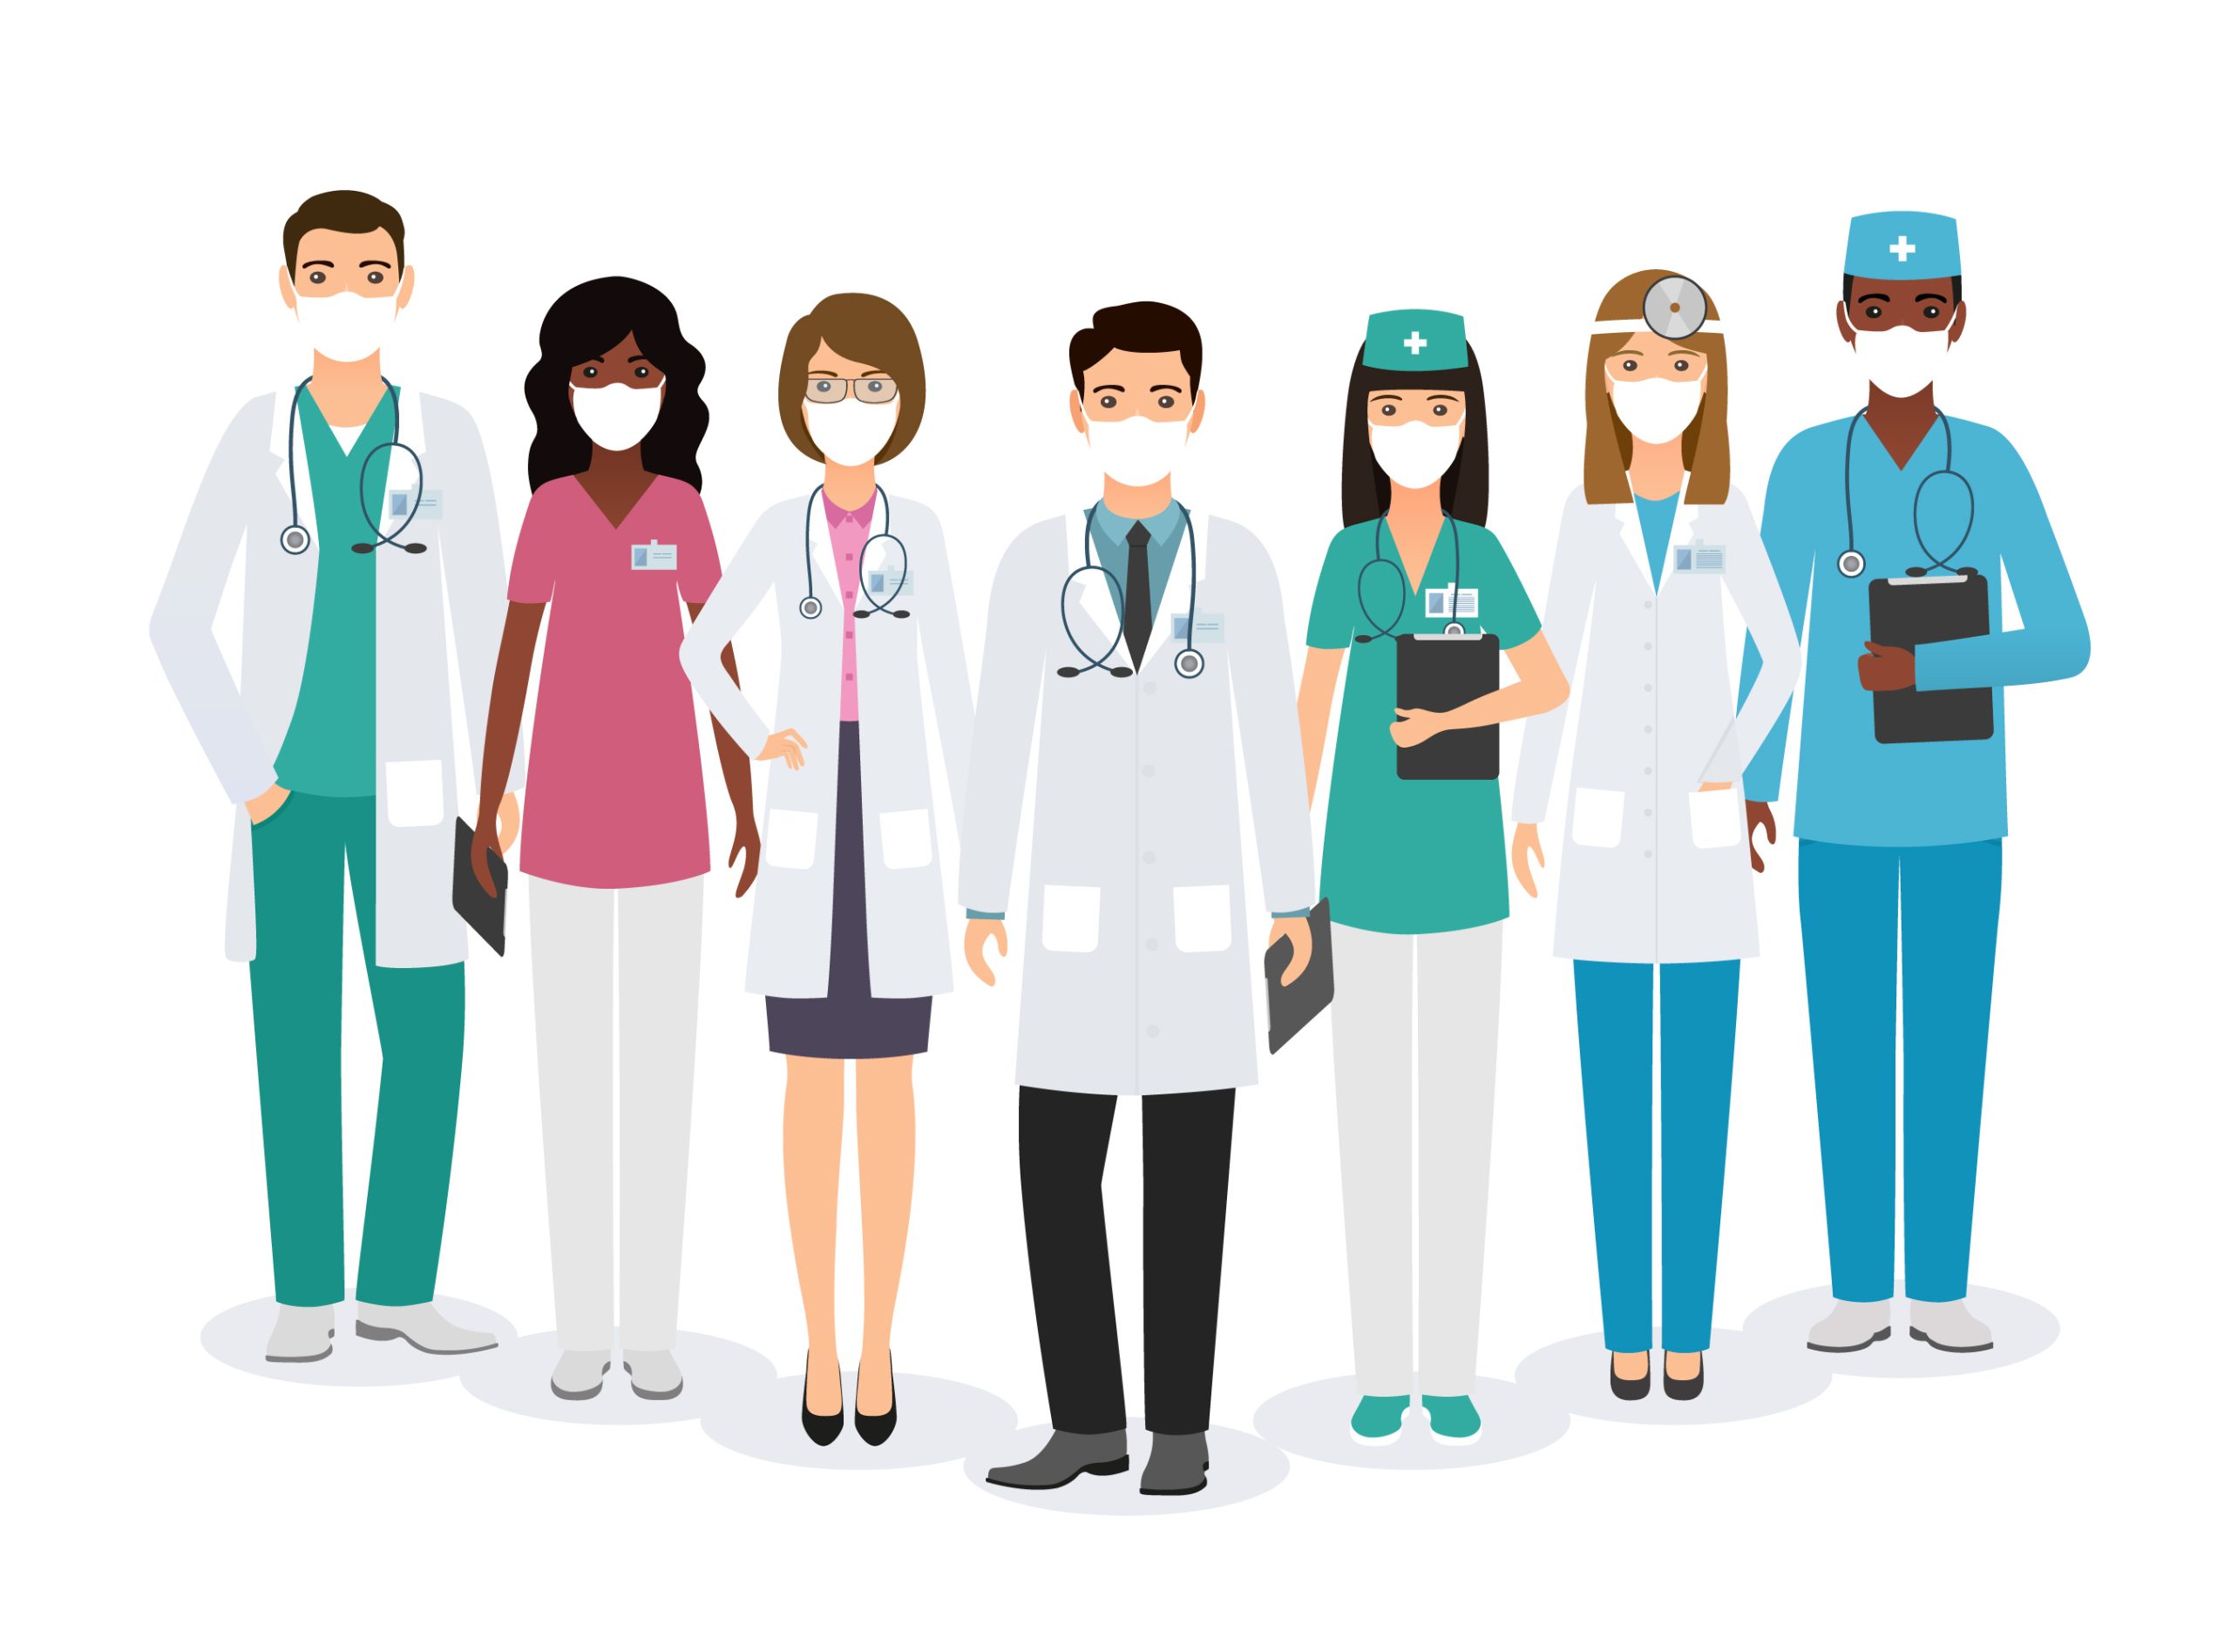 A cartoon style illustration of a healthcare team